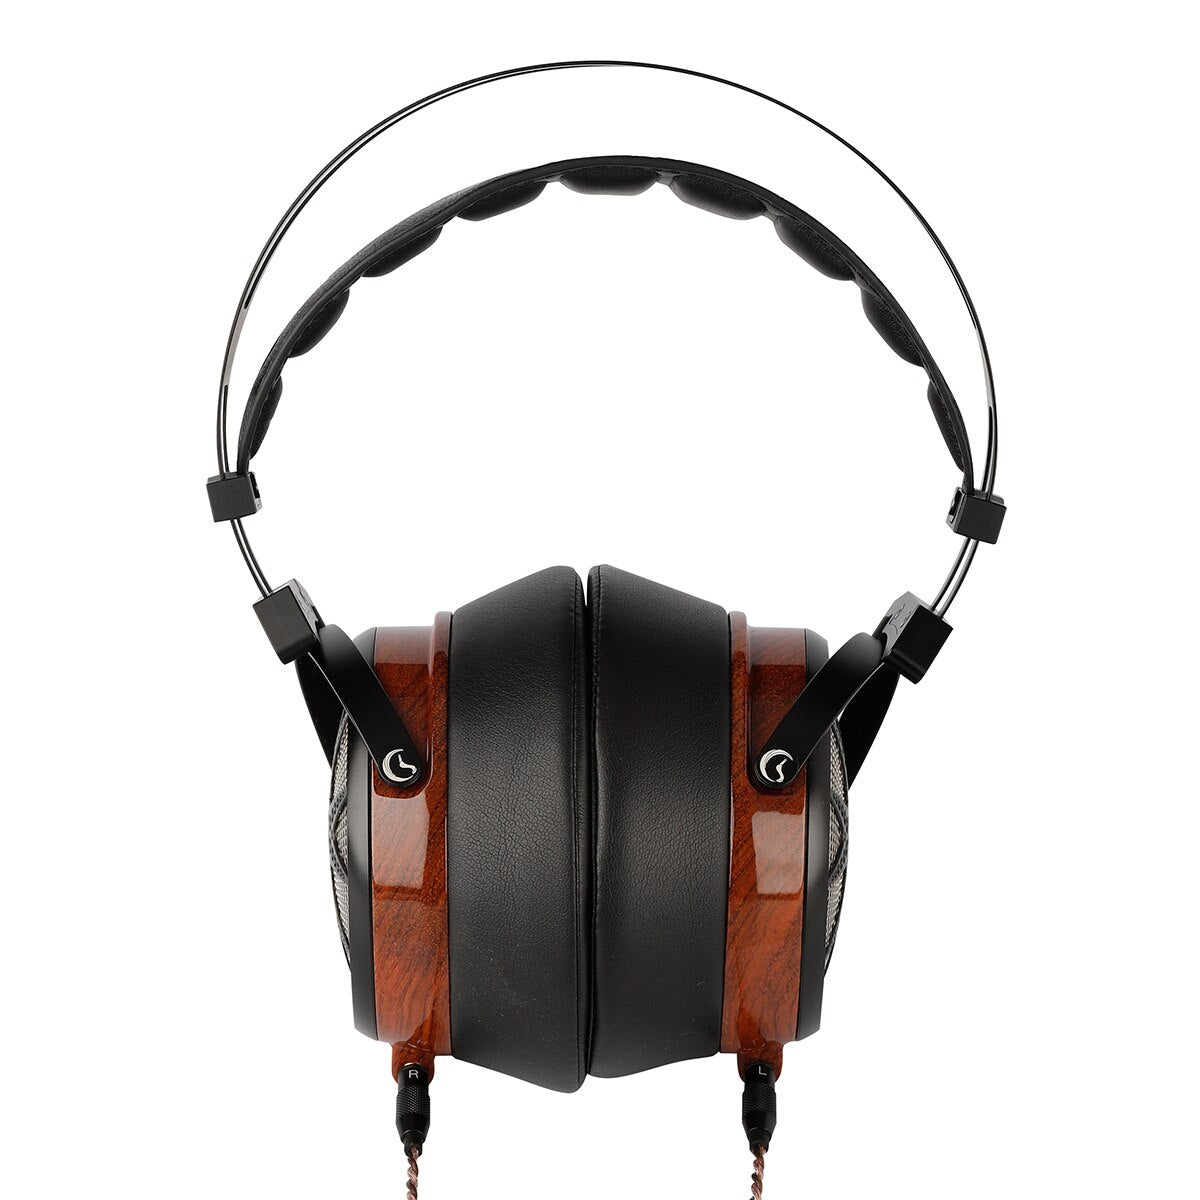 SIVGA  Apollo Planar Magnetic Driver Open-back Over-ear Wooden Headphones